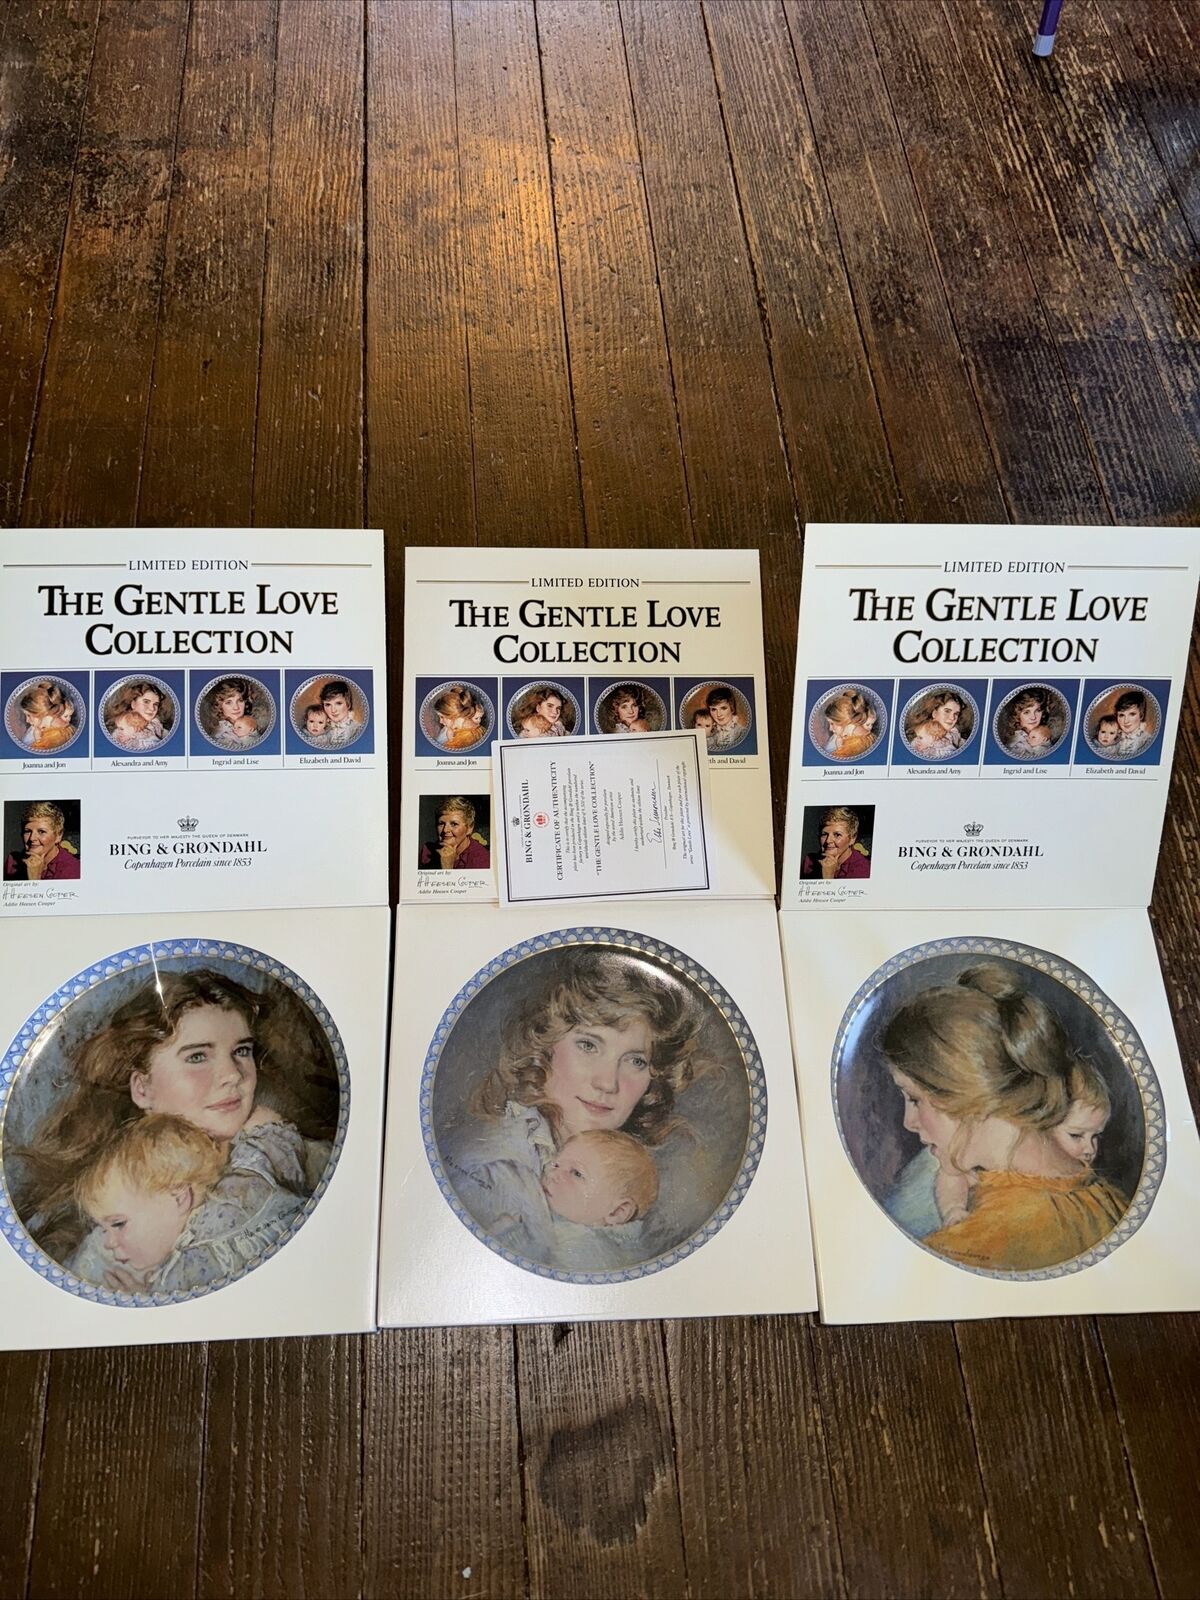 Bing & Grondahl Gentle Love Collection Limited Ed Copenhagen Porcelain Plates